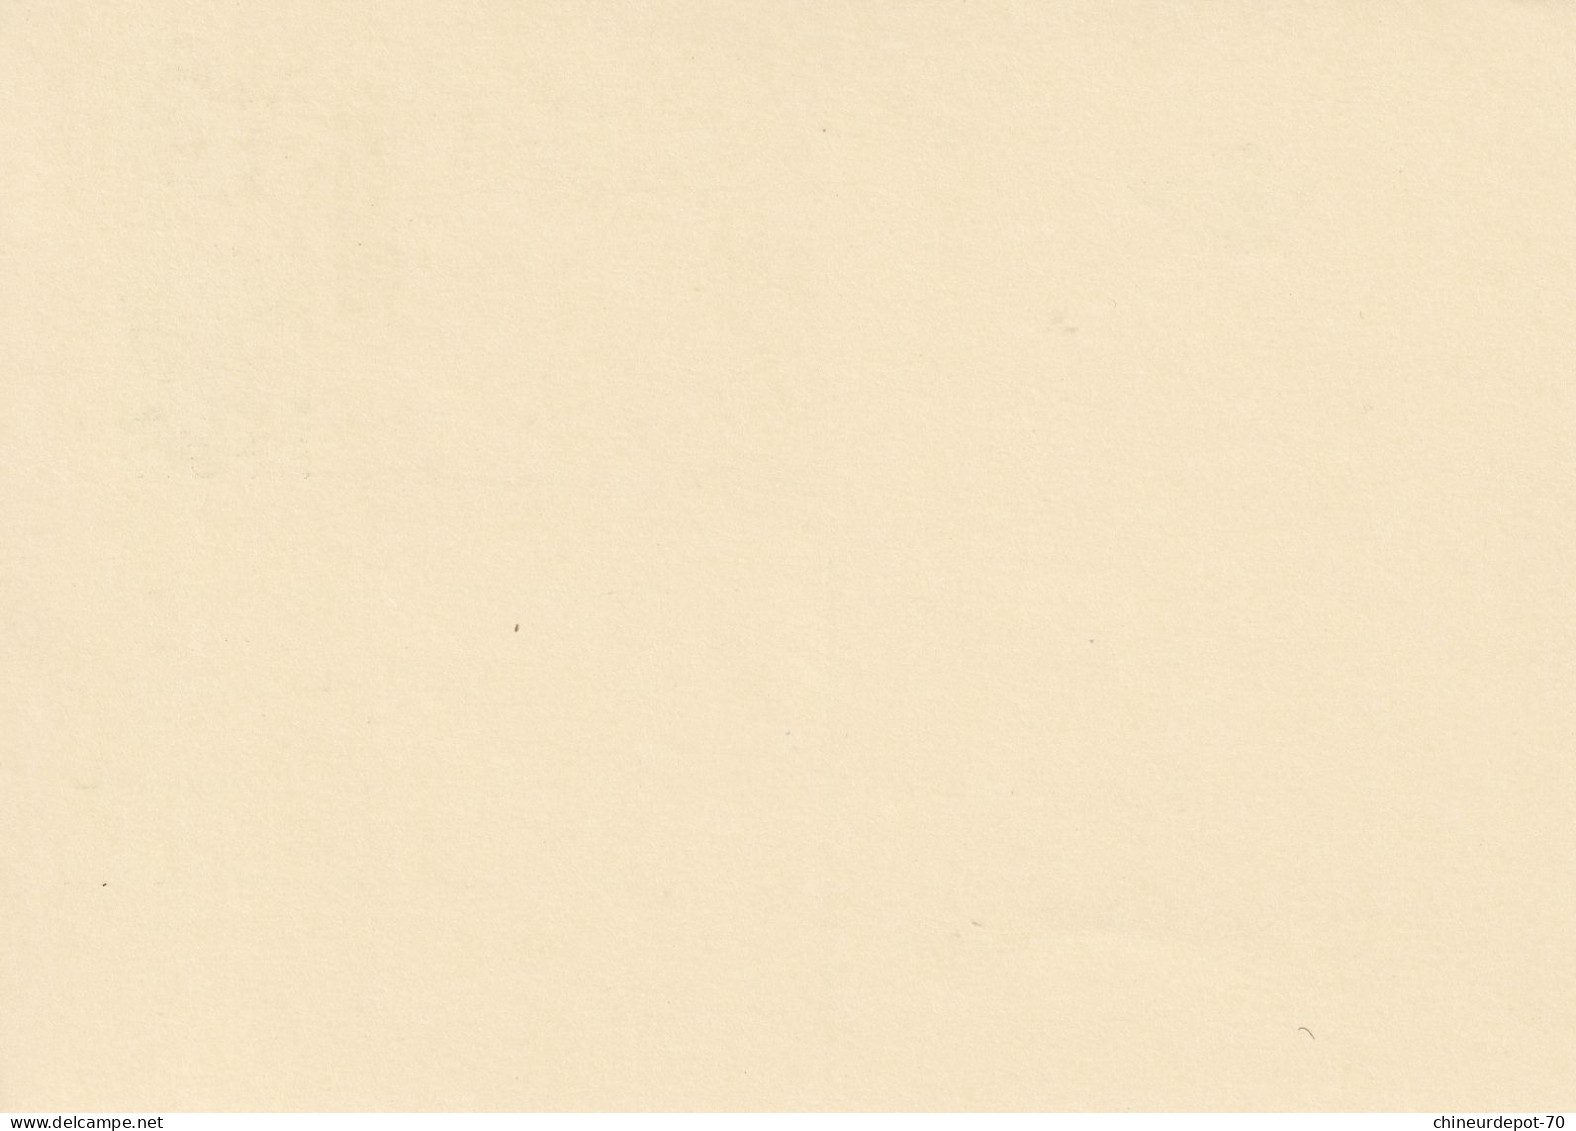 CARTE CORRESPONDANCE  2F50 - Cartes Postales Illustrées (1971-2014) [BK]